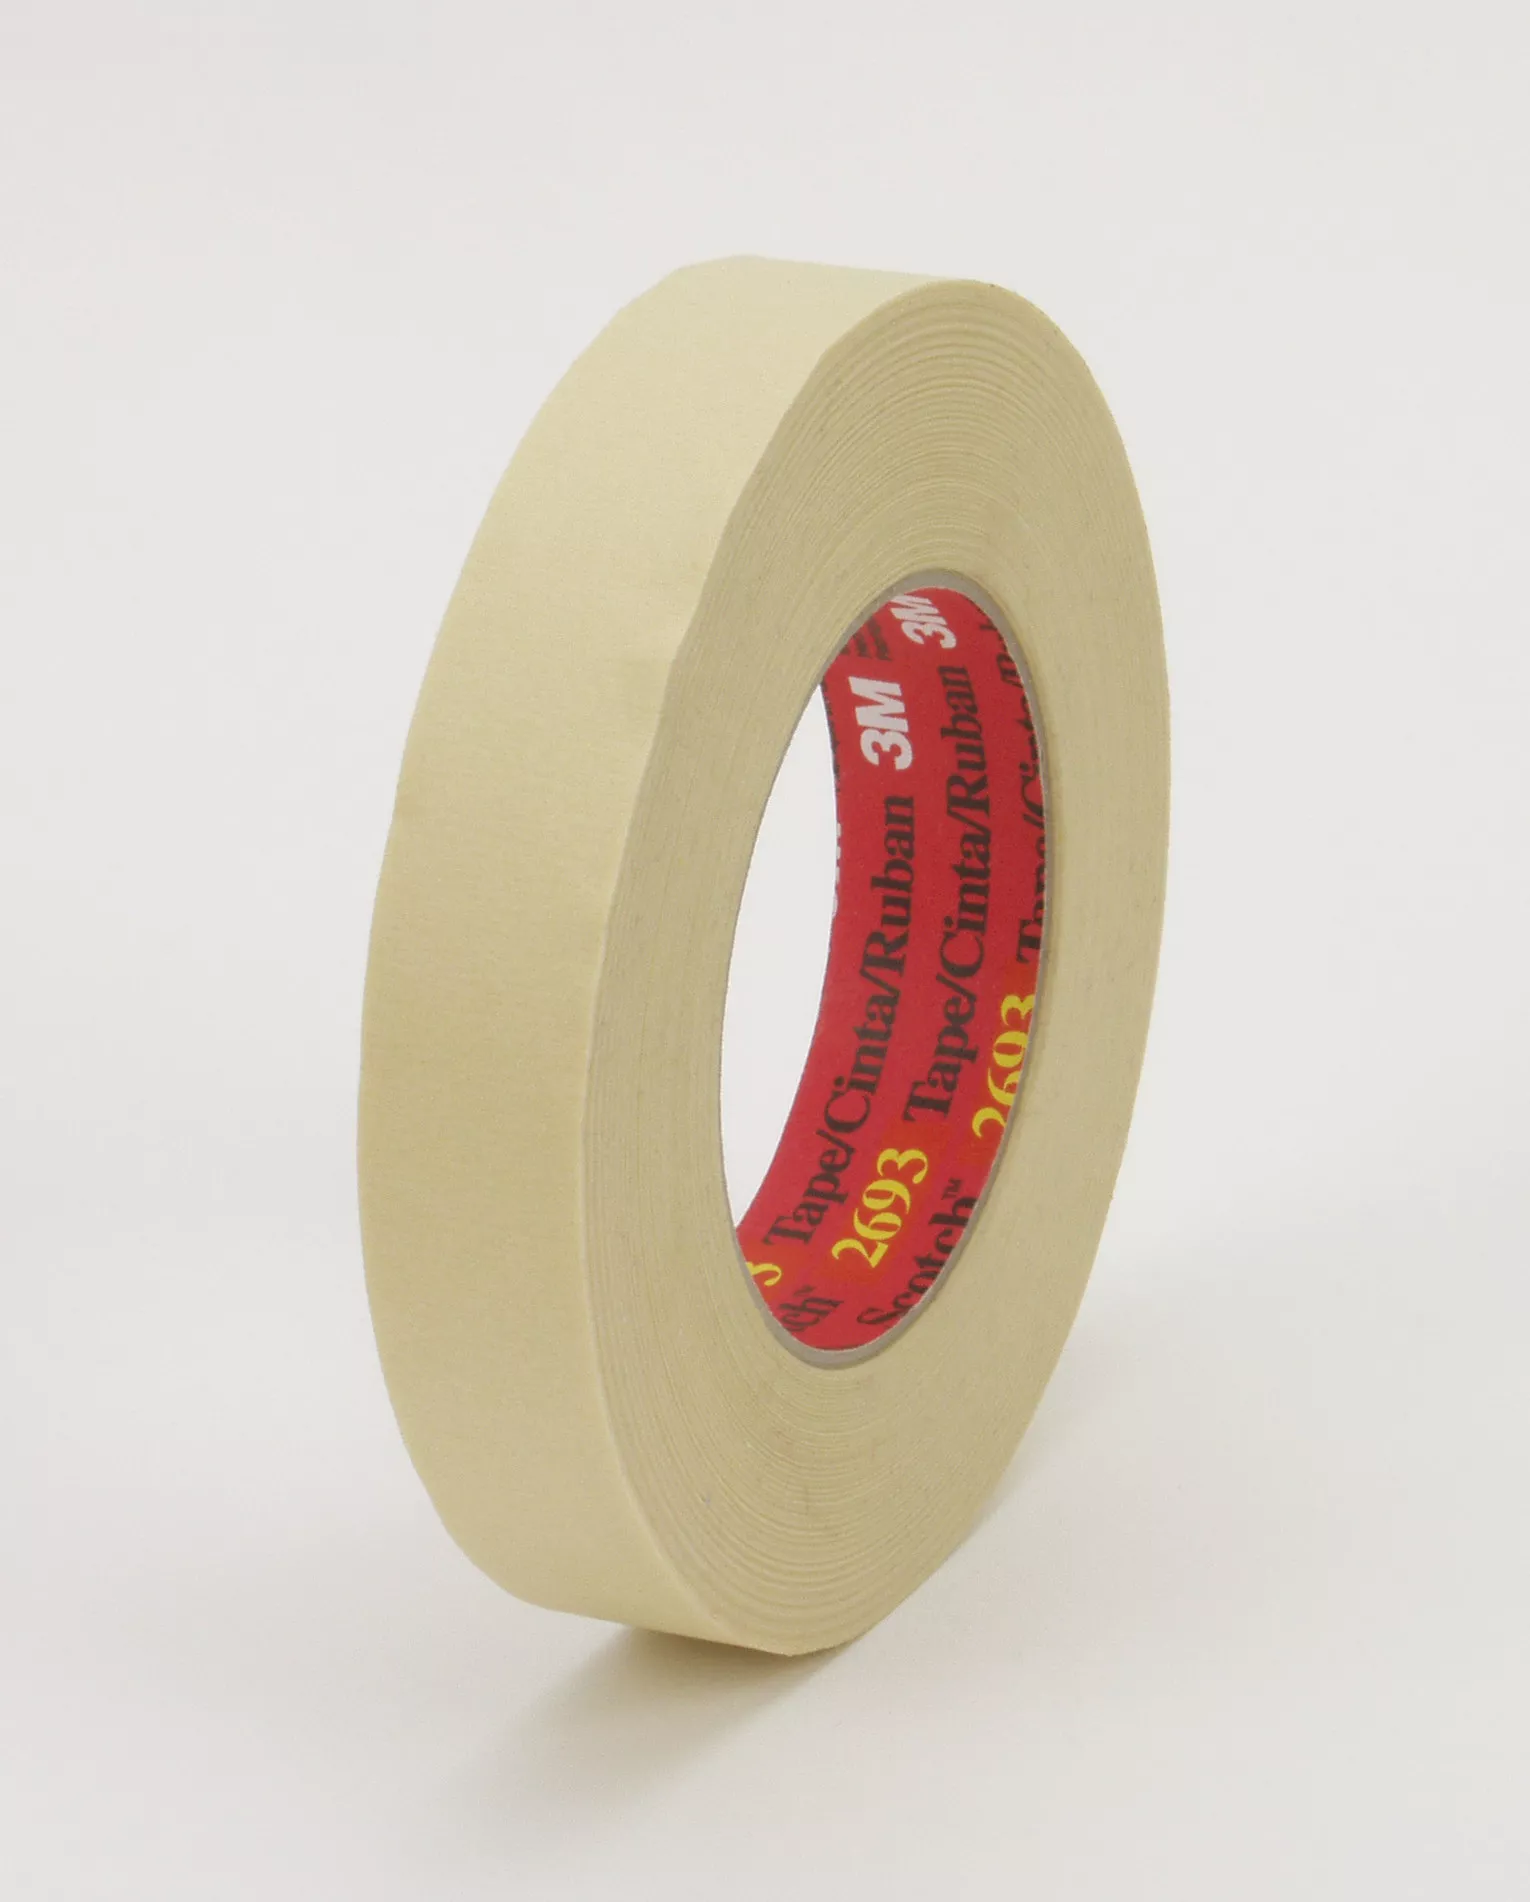 SKU 7010334161 | 3M™ High Performance Masking Tape 2693